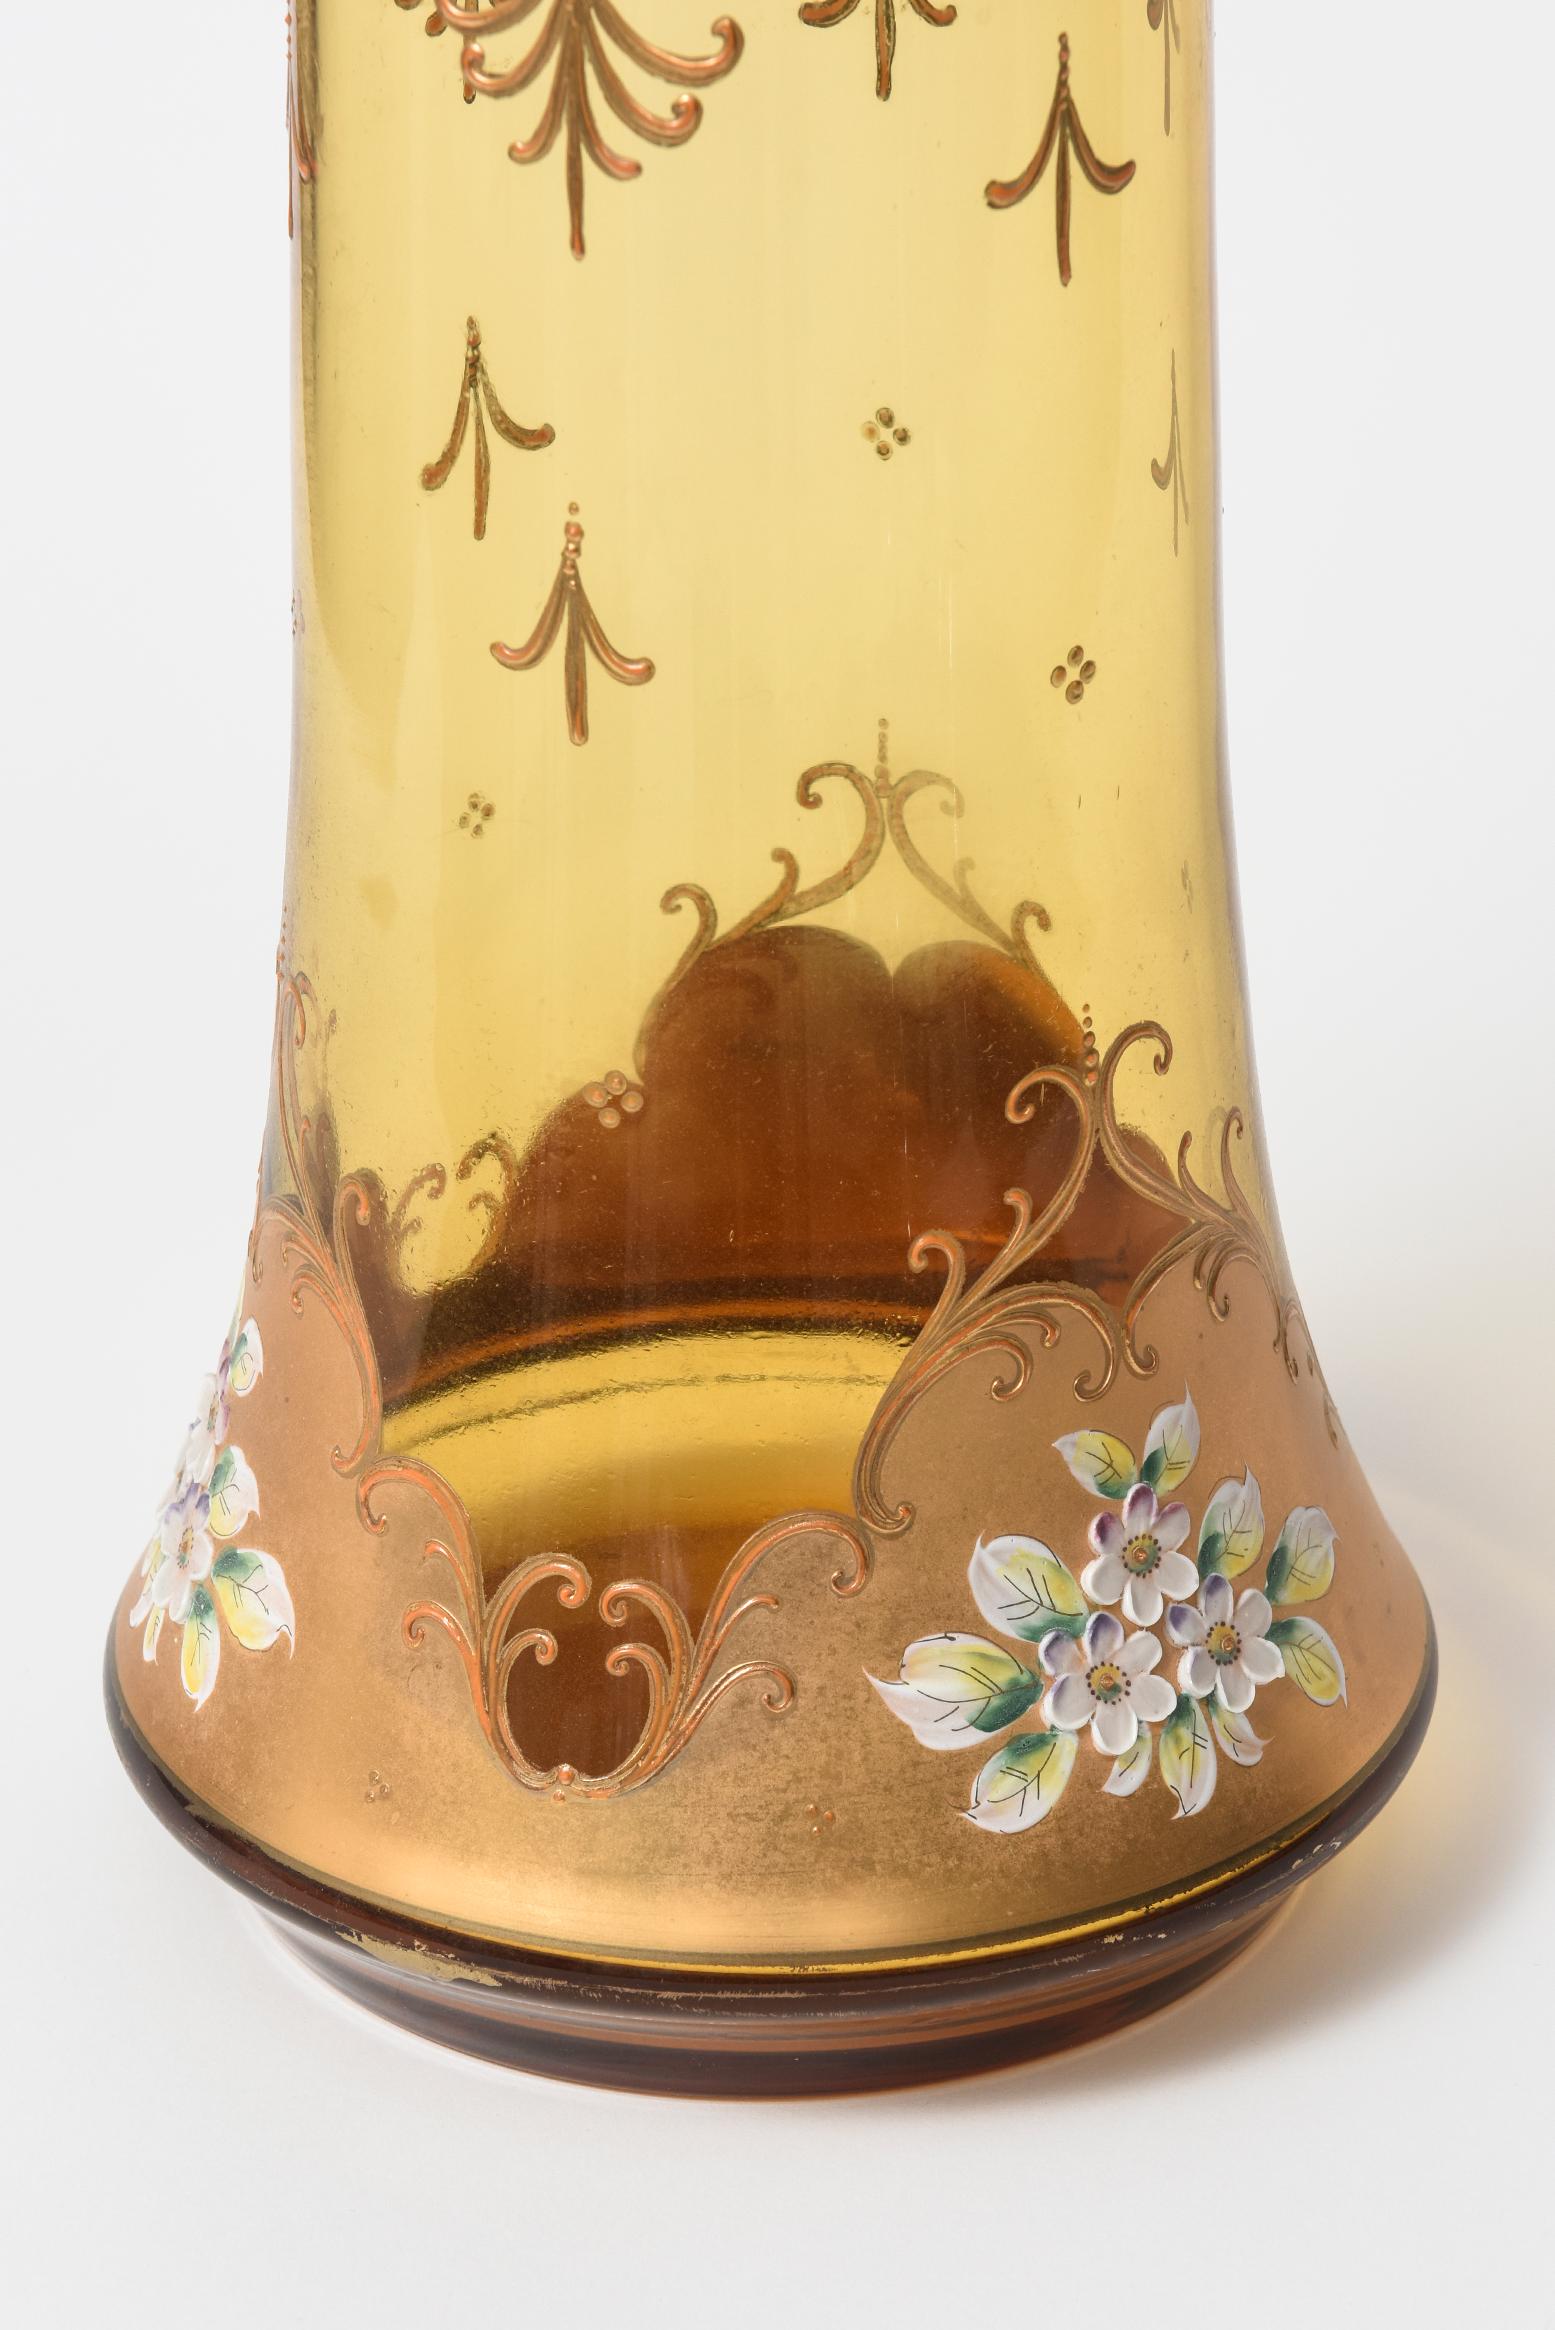 bohemia crystal vase made in czechoslovakia